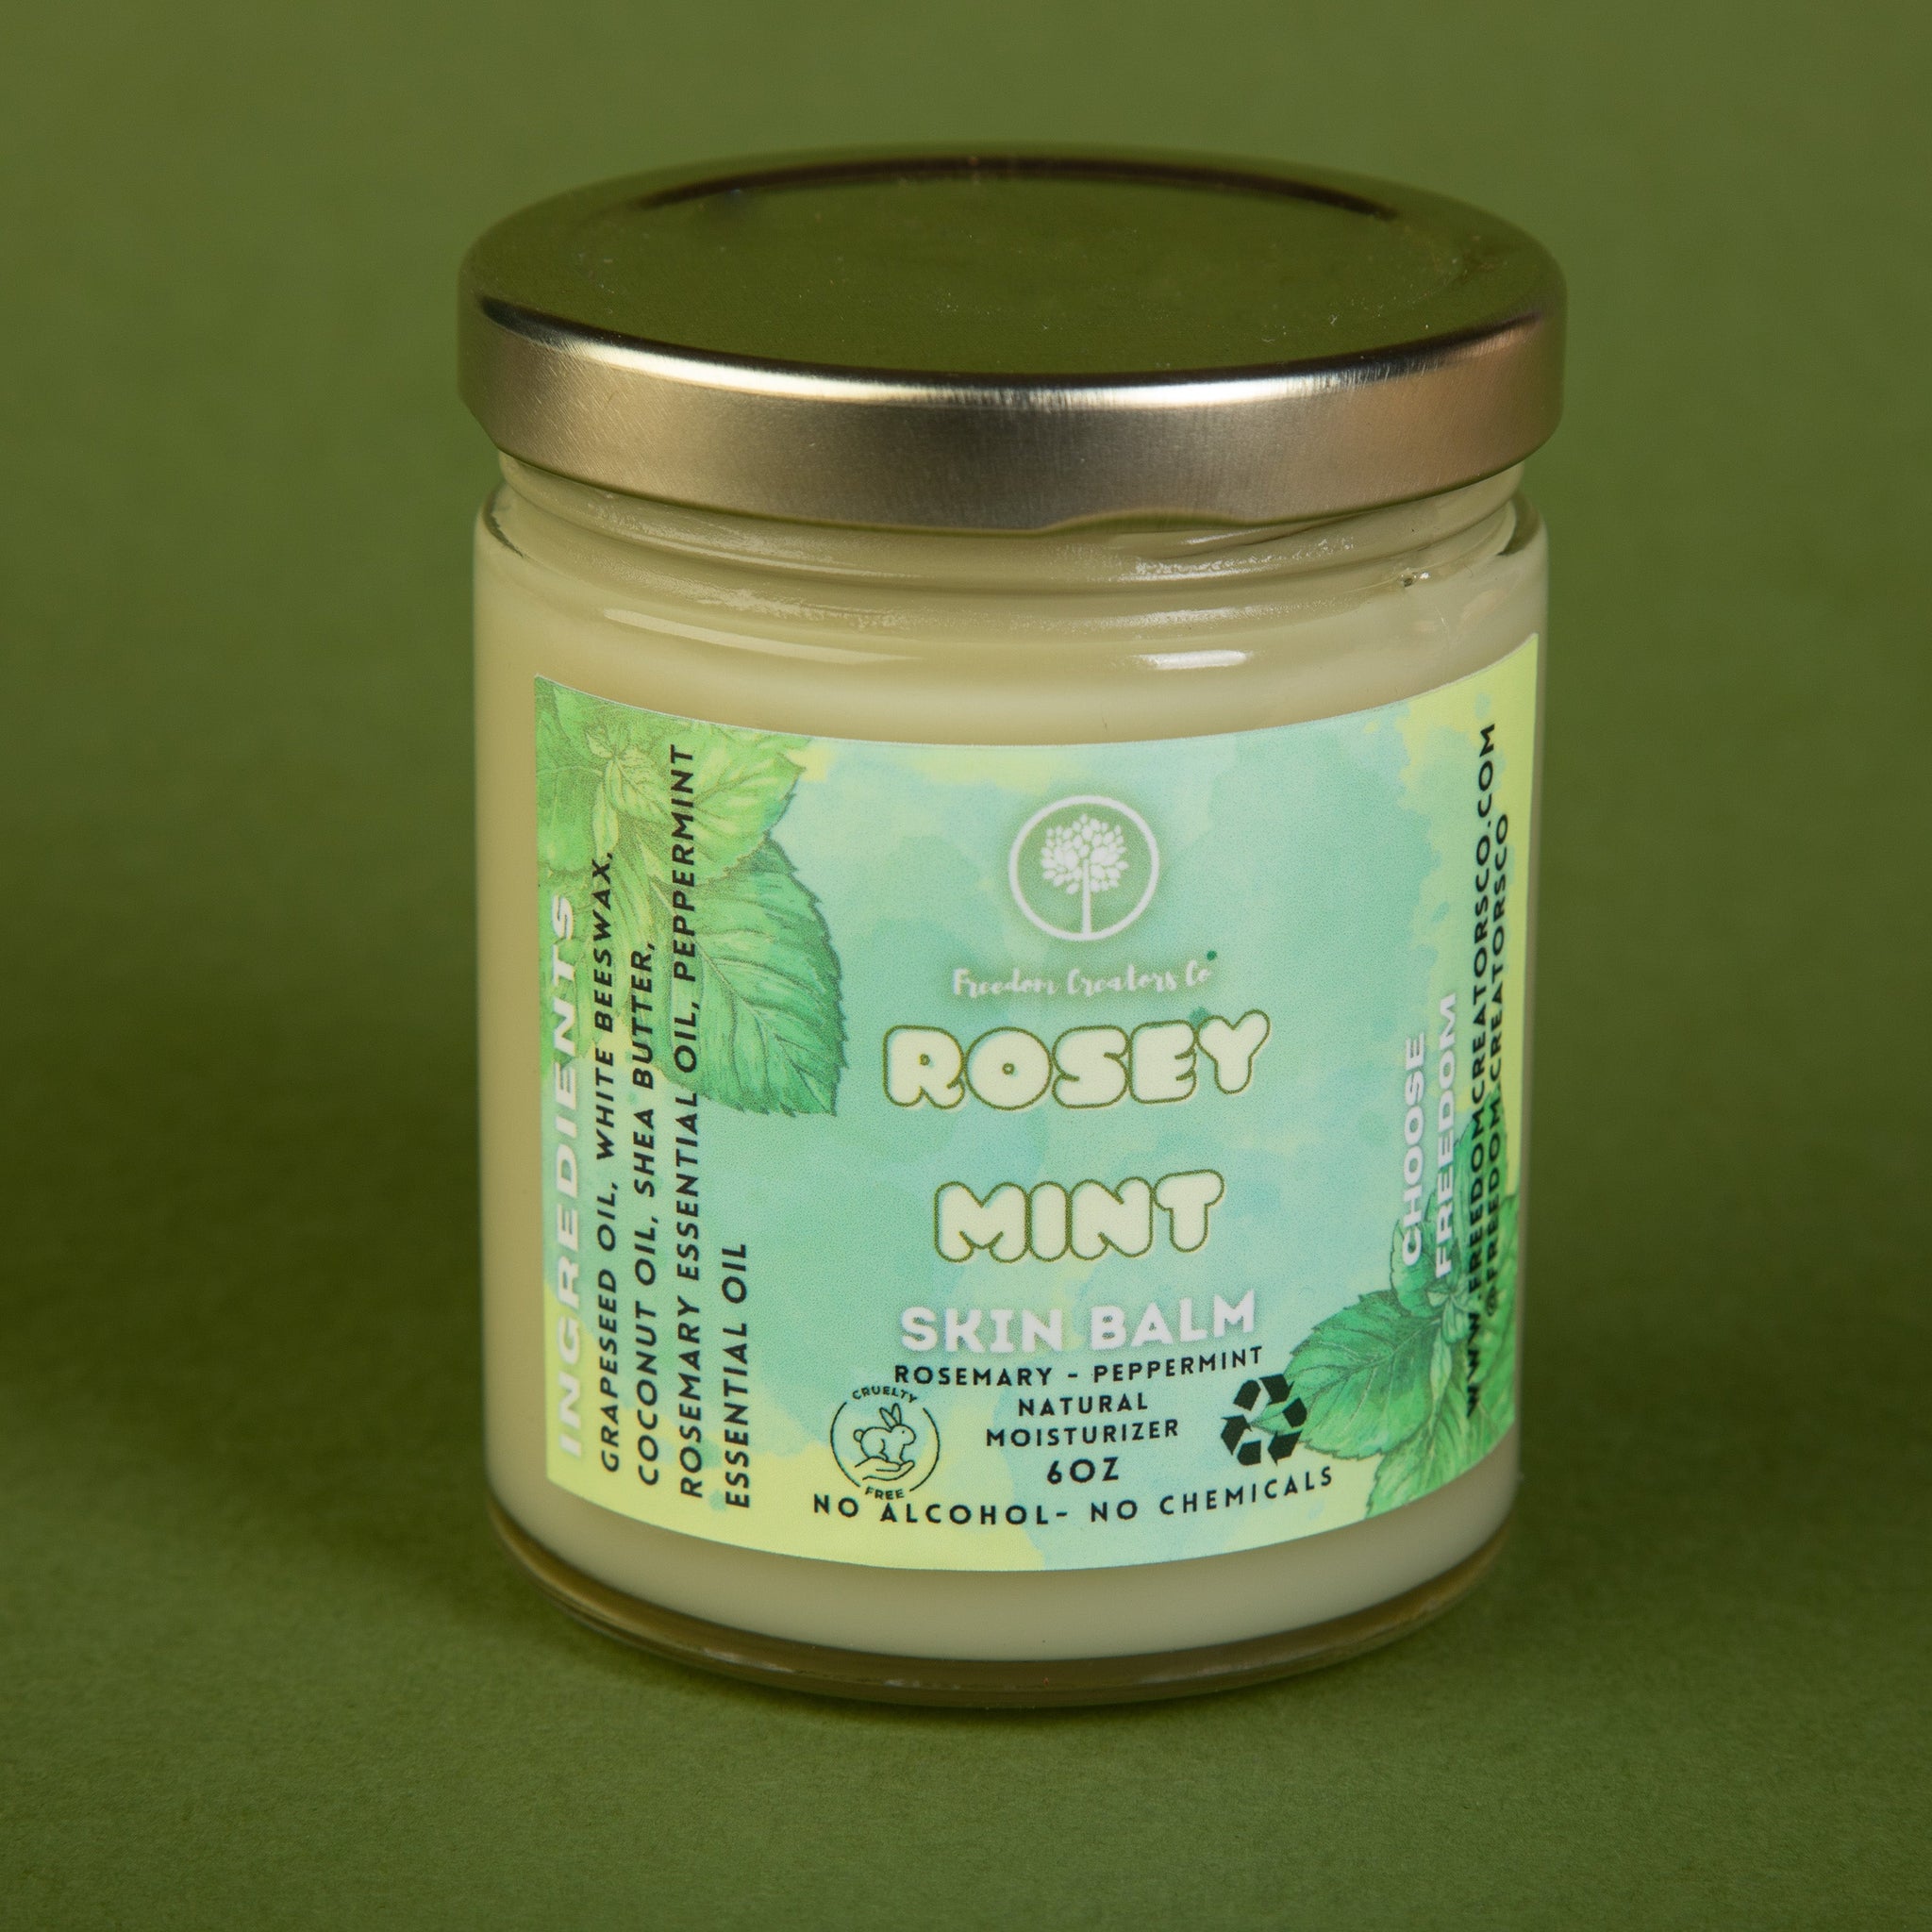 Rosey Mint Skin Balm (Rosemary & Peppermint)